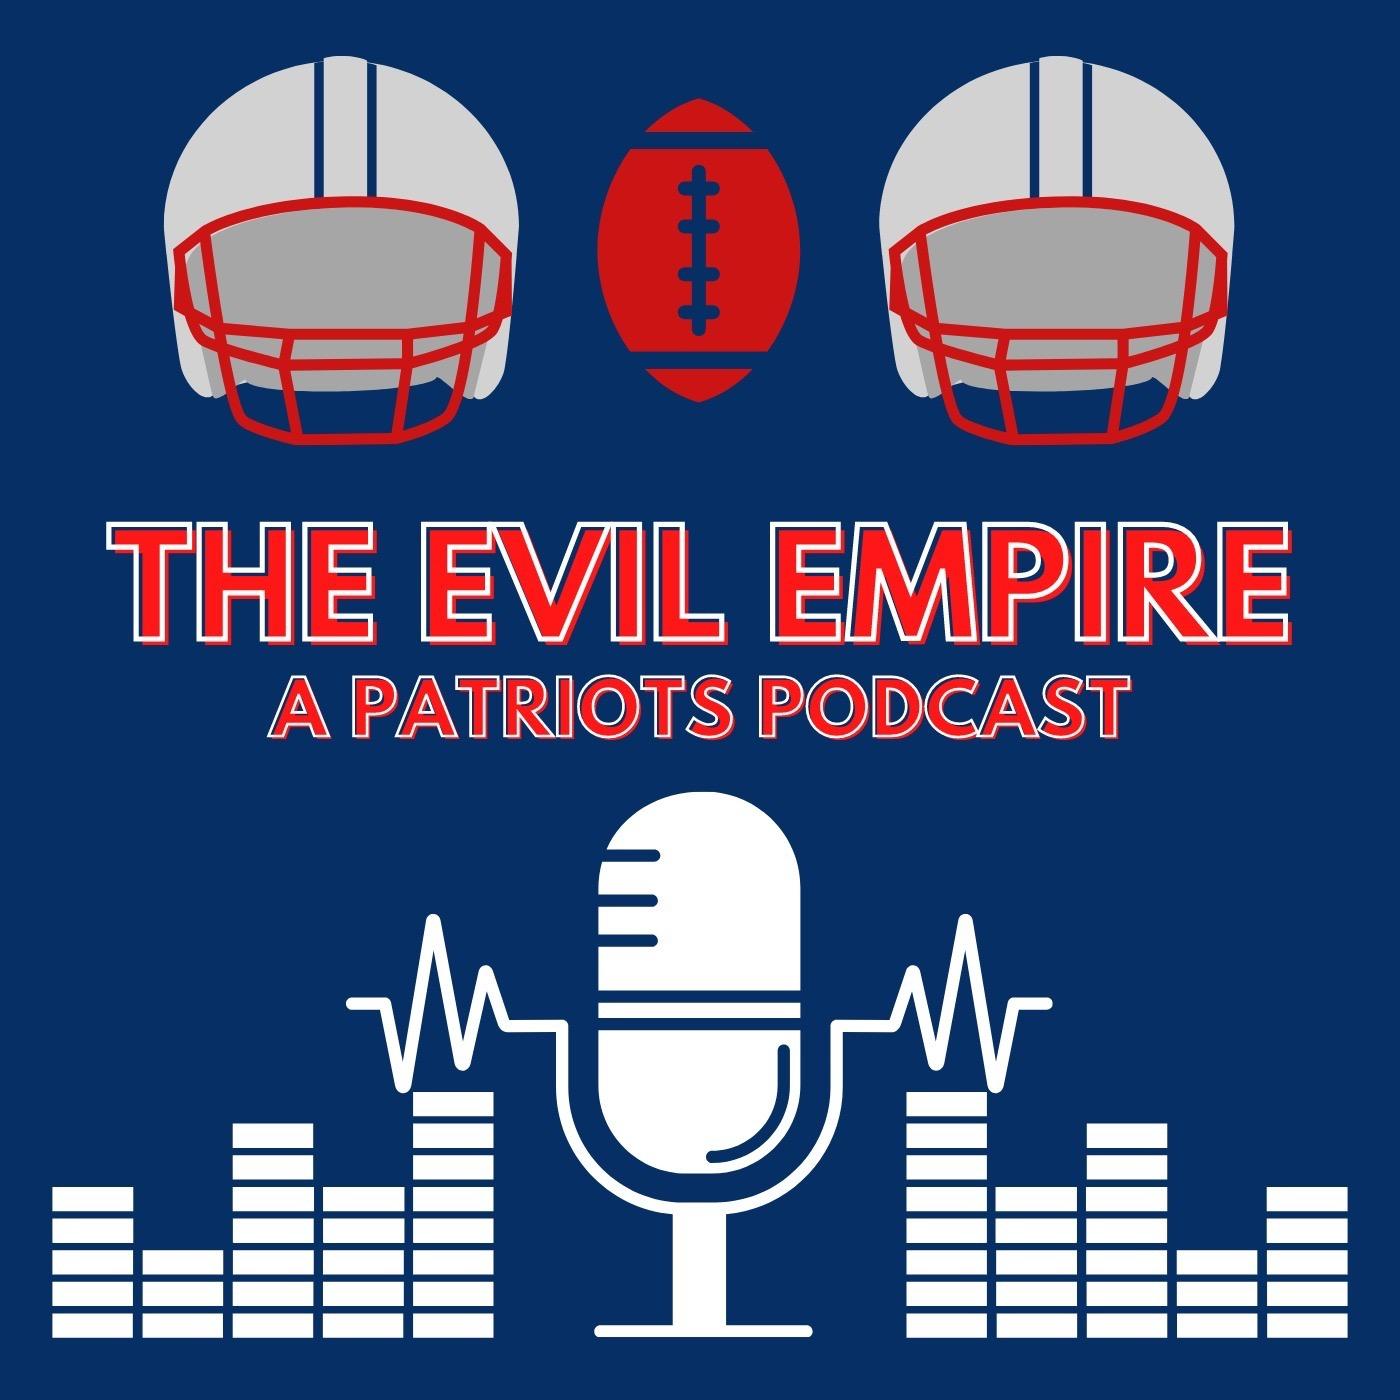 The Evil Empire Podcast 2.0